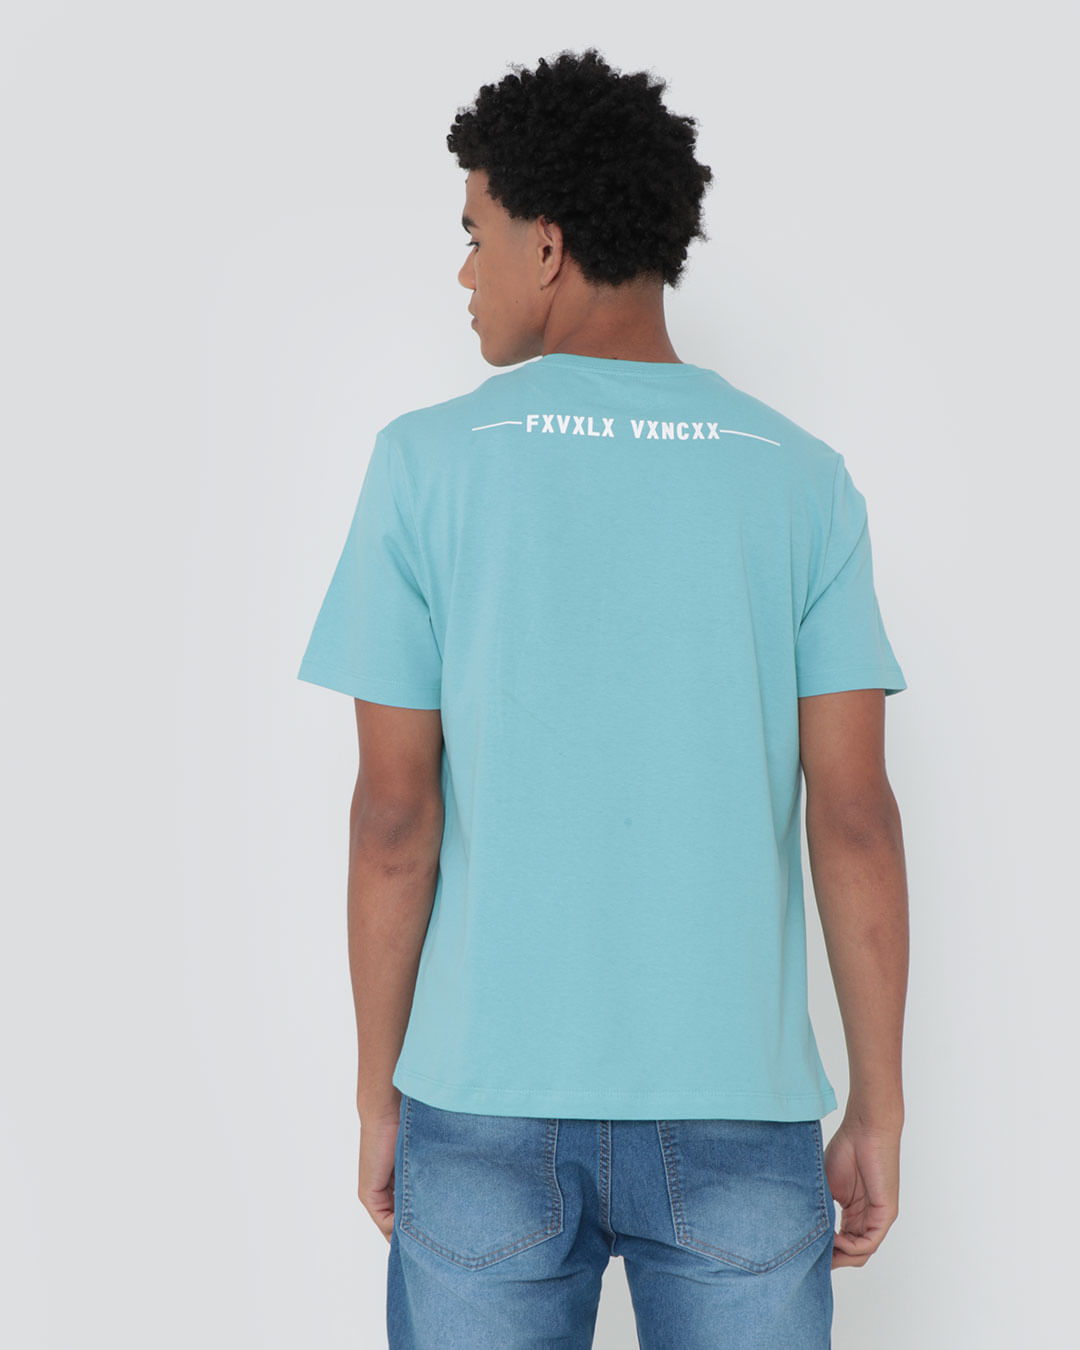 Camiseta-Estampa-Frontal-Kondzilla-Azul